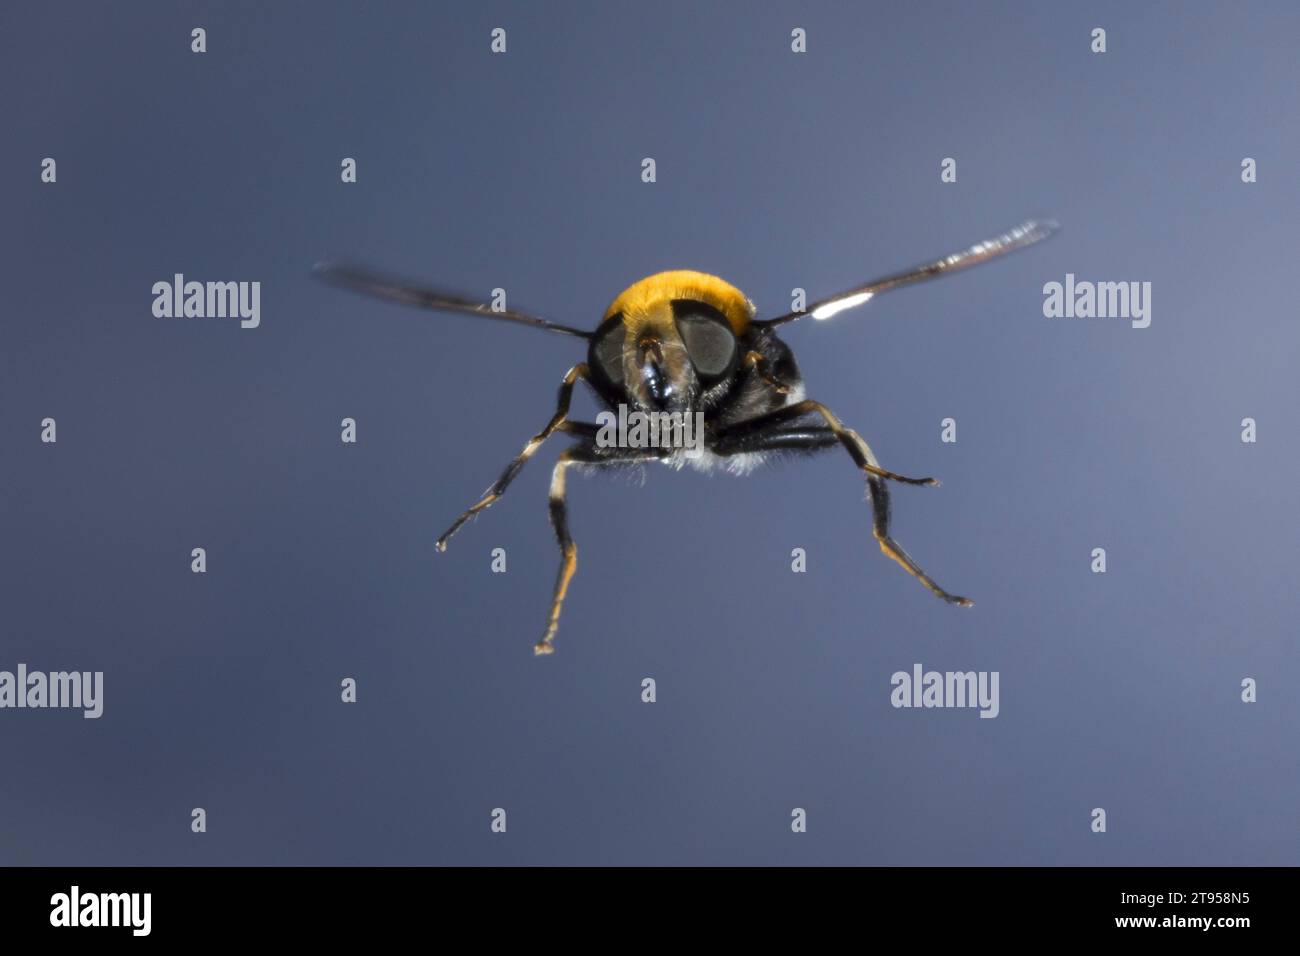 Felldrohne Fly, Felldrohne (Eristalis intricaria), im Flug, Vorderansicht, Deutschland Stockfoto